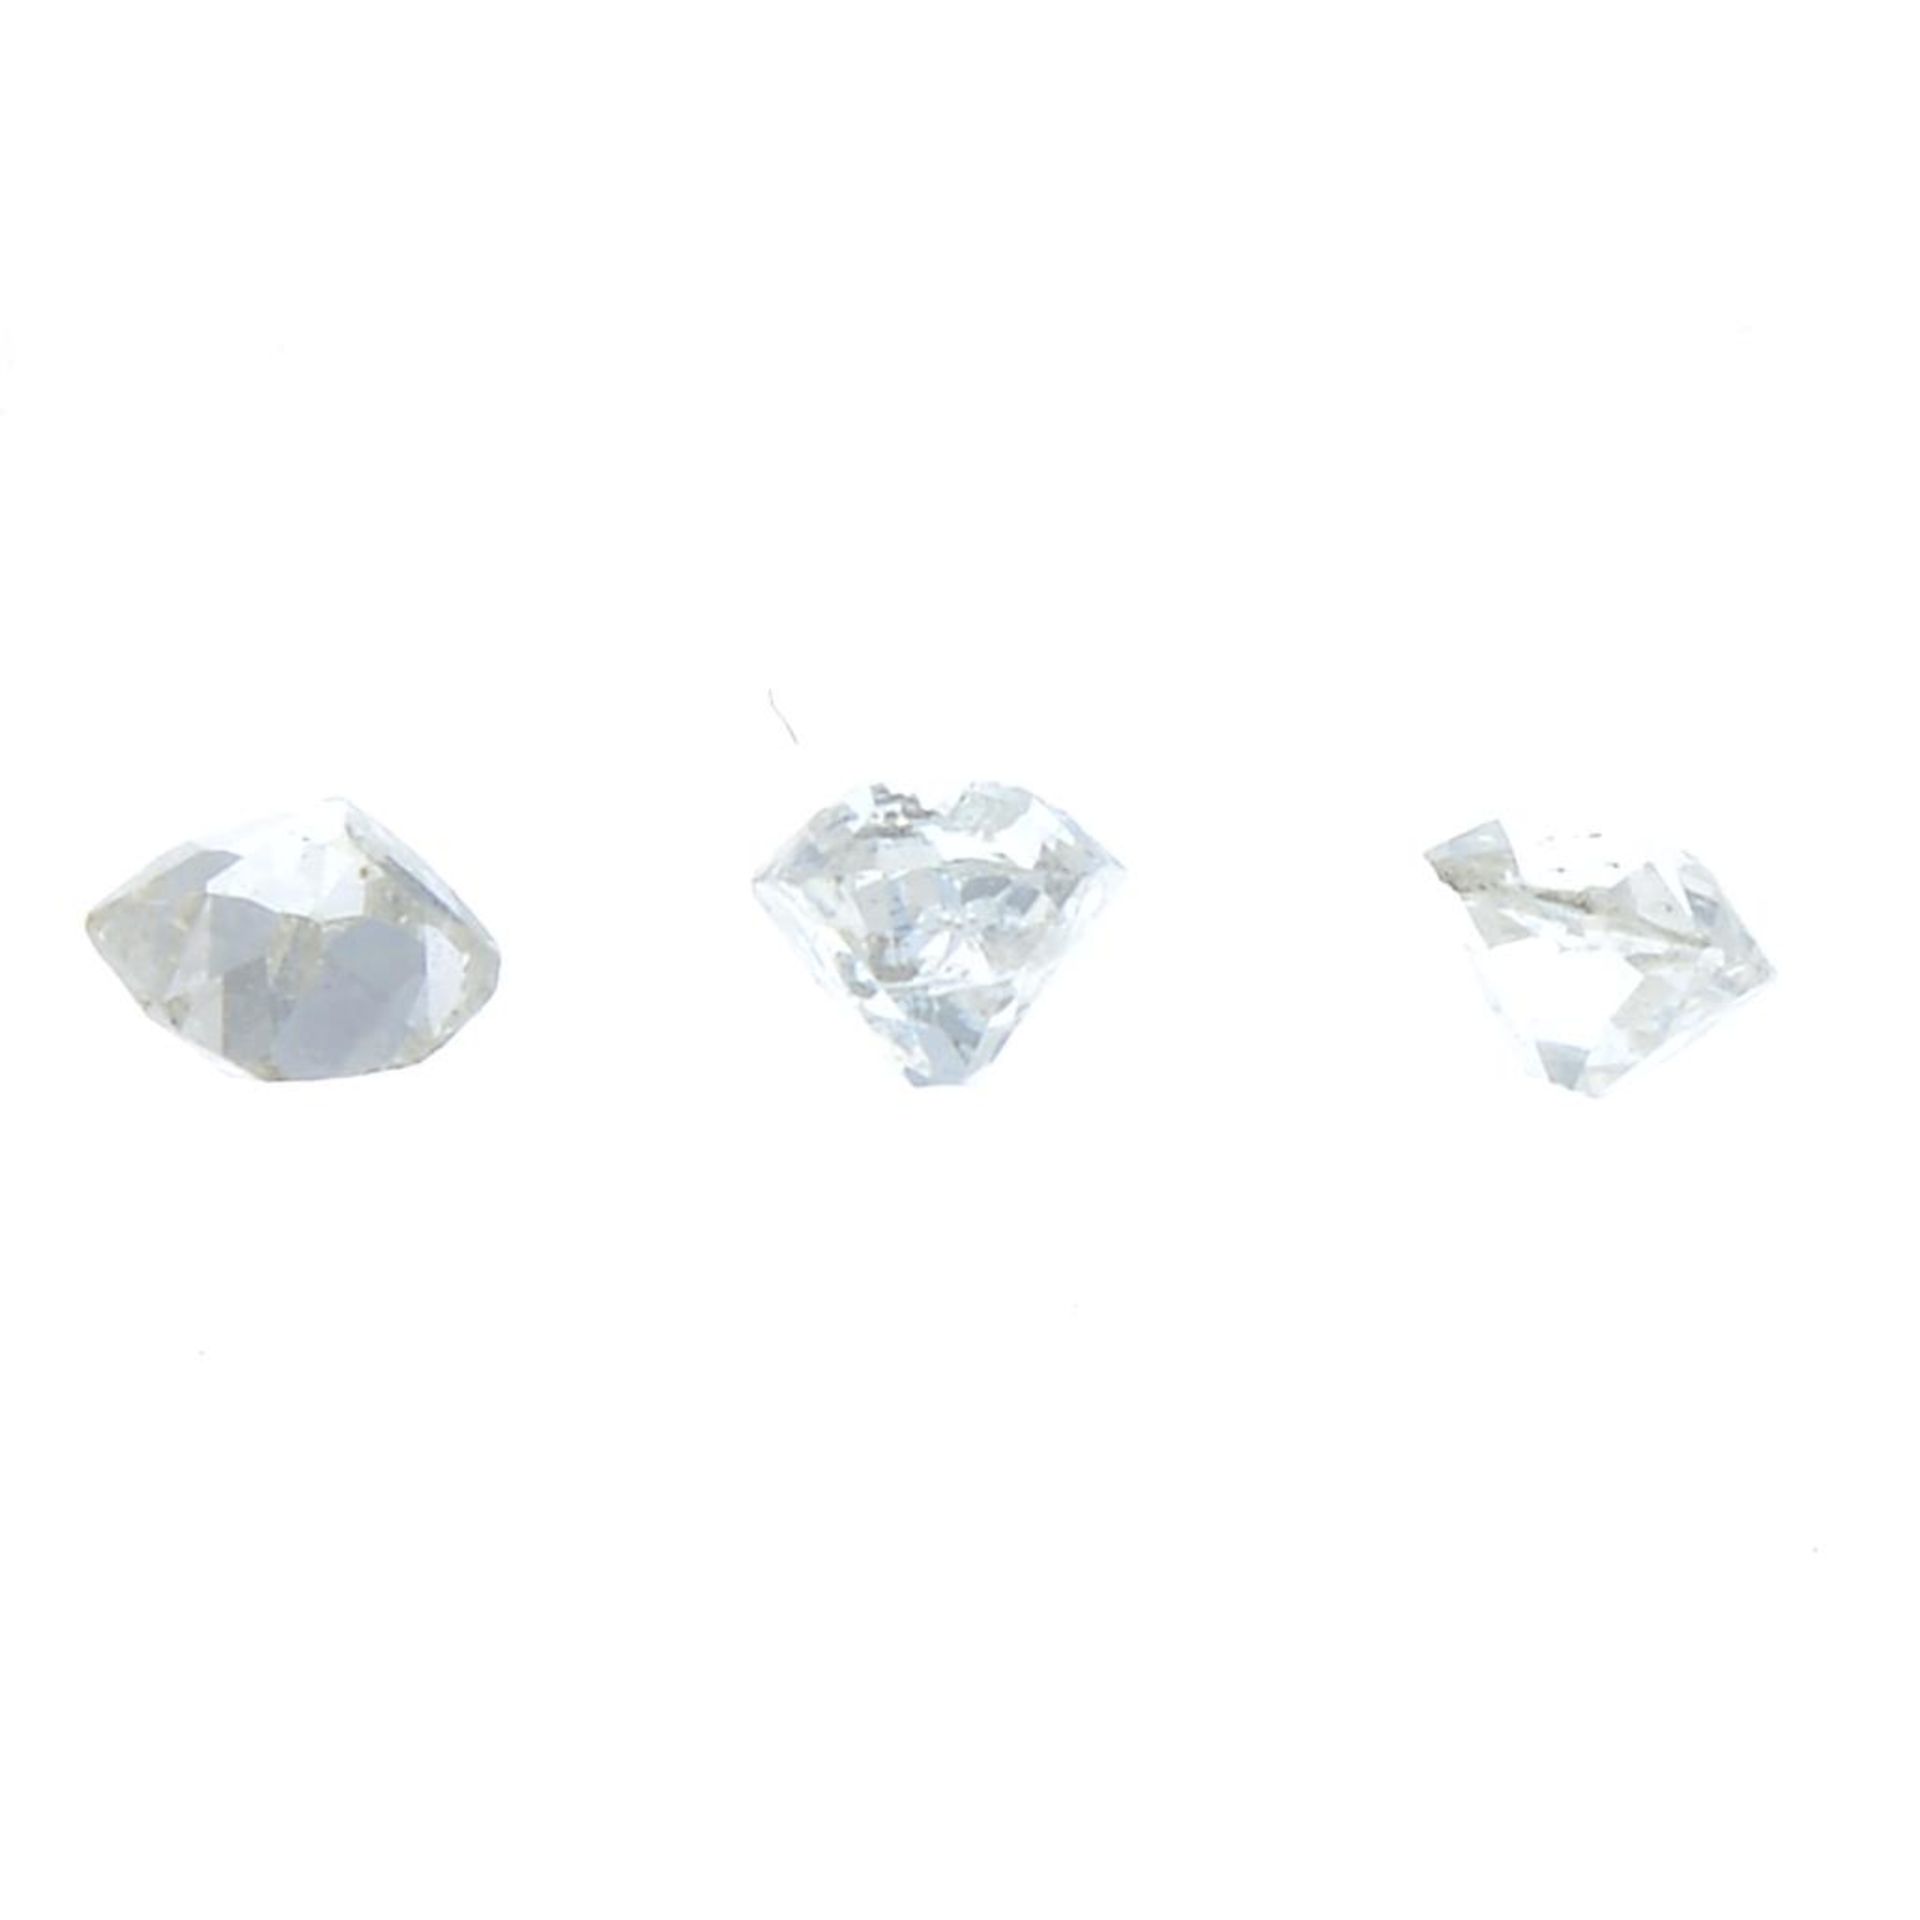 Three old-cut diamonds. - Image 2 of 2